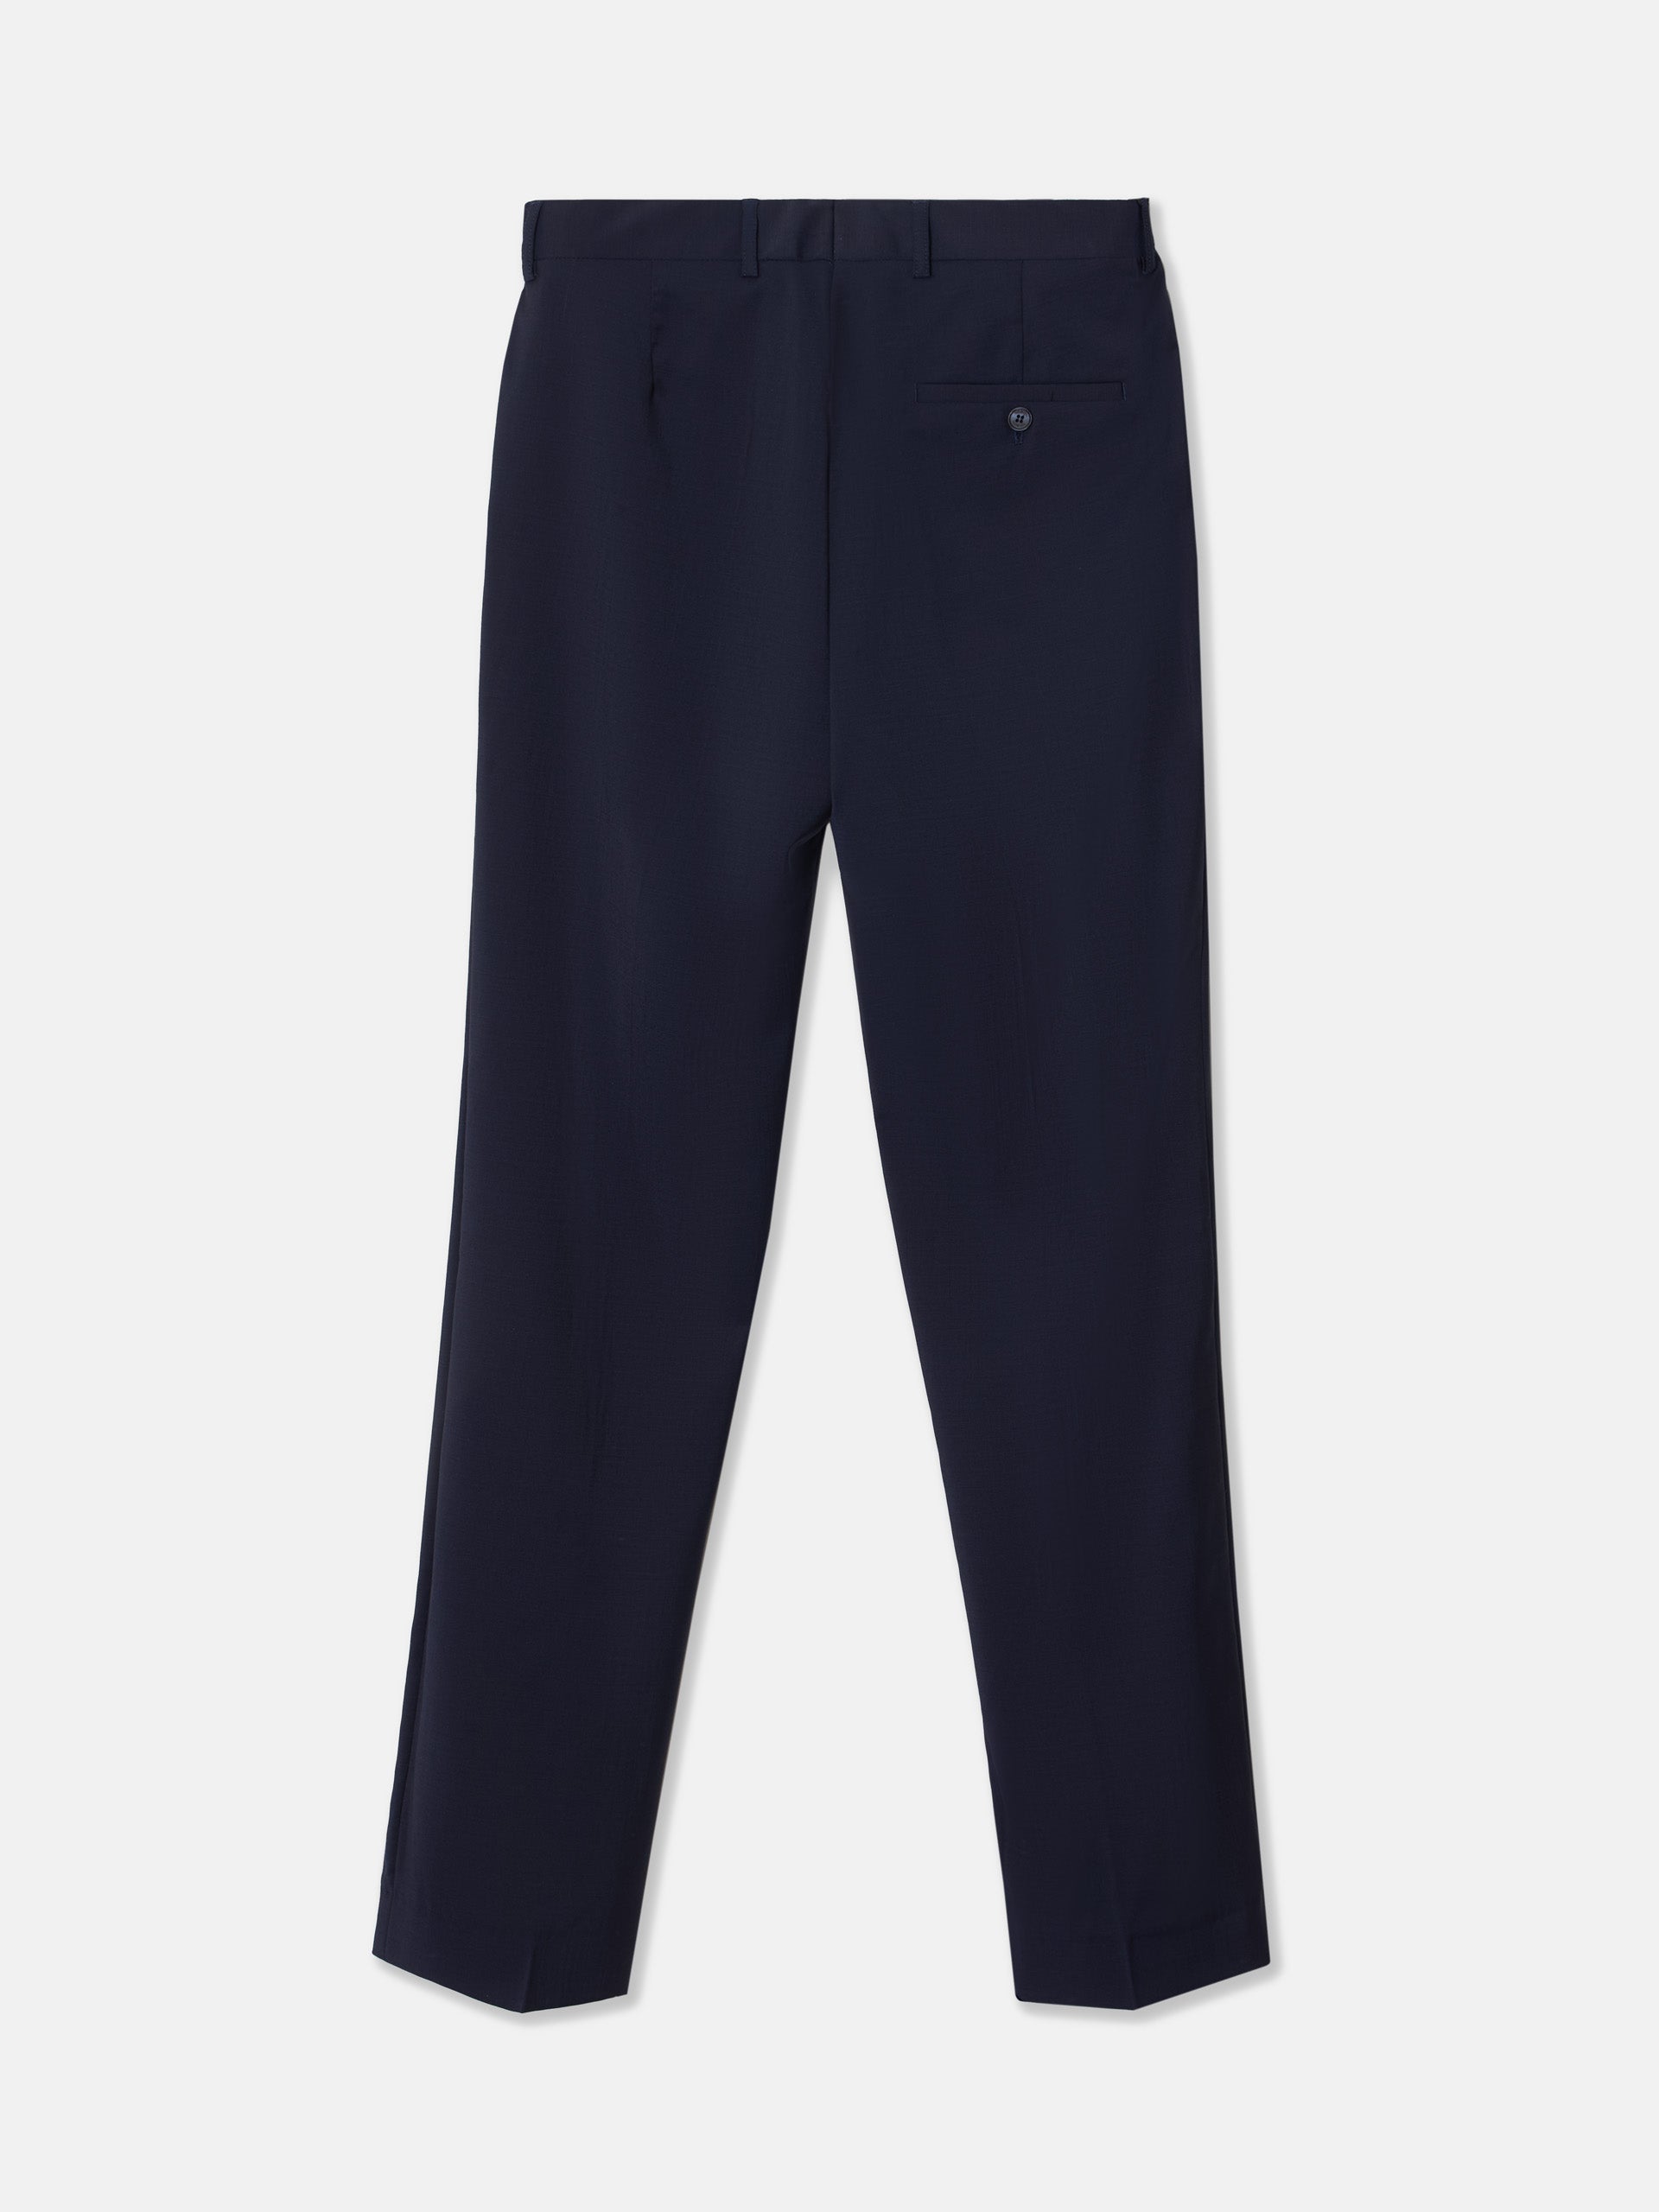 Pantalon traje natural stretch azul claro